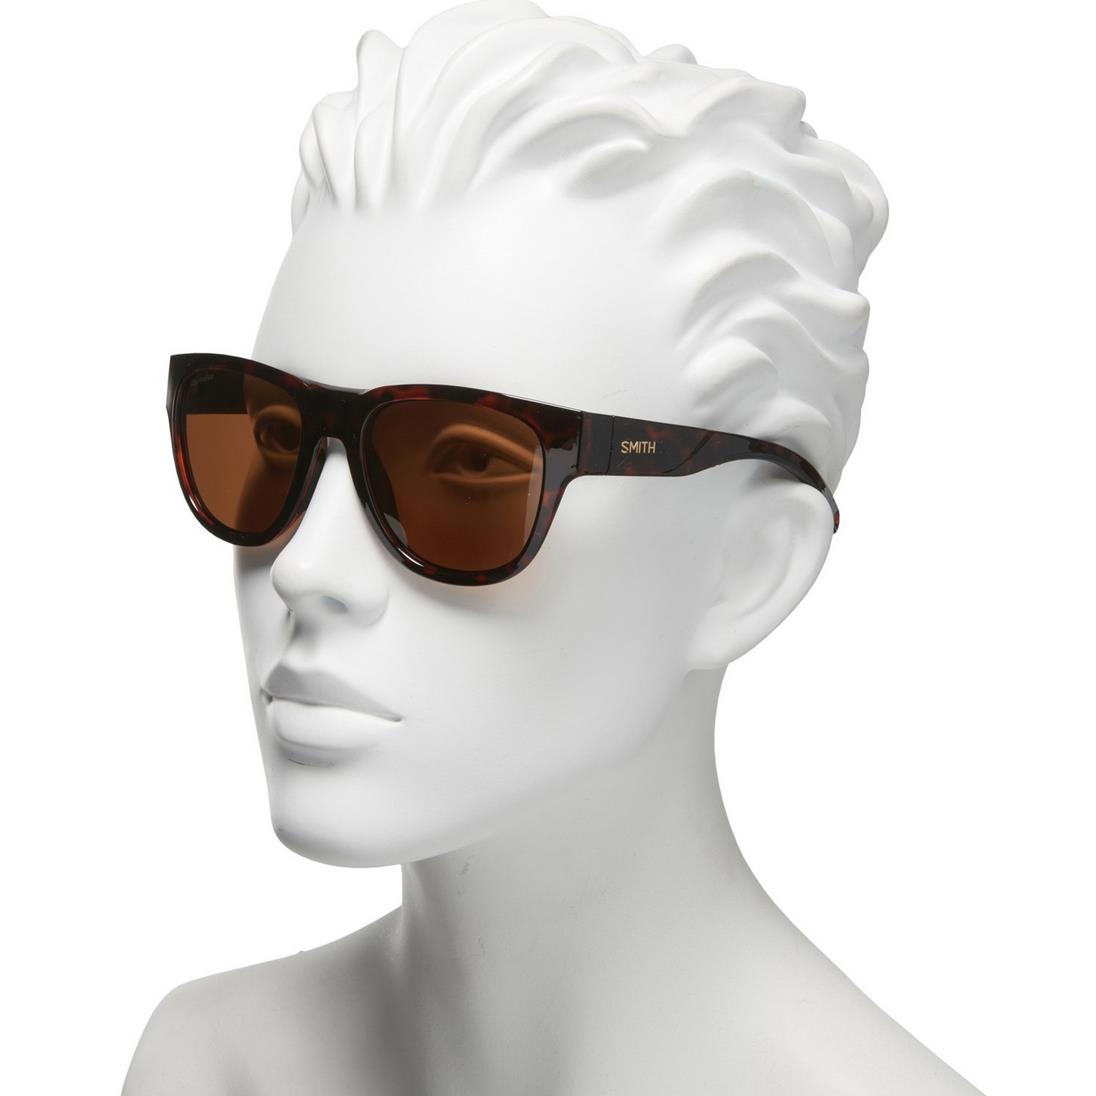 Smith For Women - Rockaway Sunglasses - Chromapop Polarized Lenses